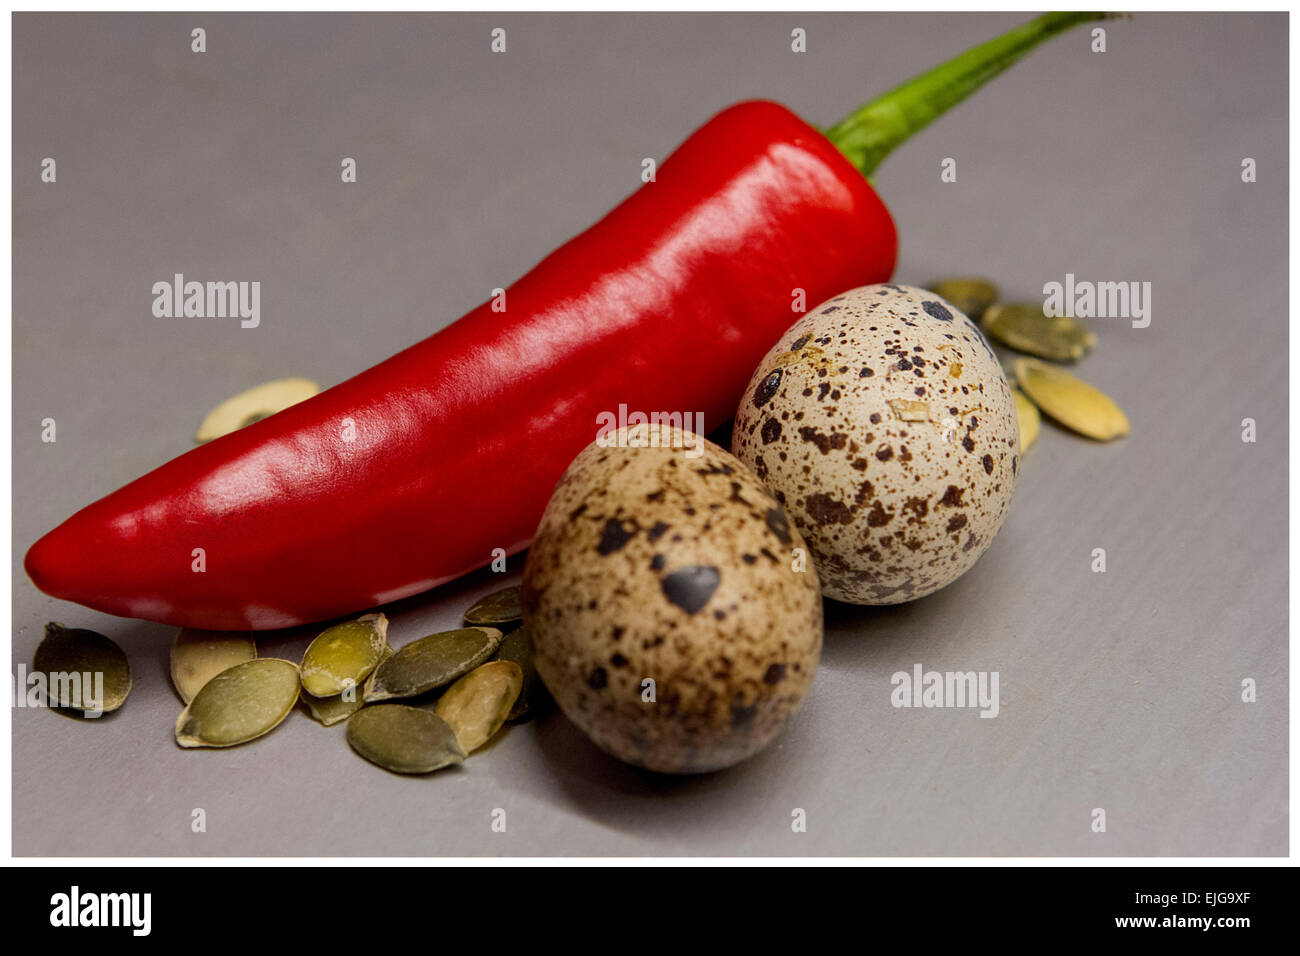 chili decoration, chili presentation, presentacion del aji, food ingredient, quail eggs, Red chili peppers, Hot Thai chilis, Stock Photo